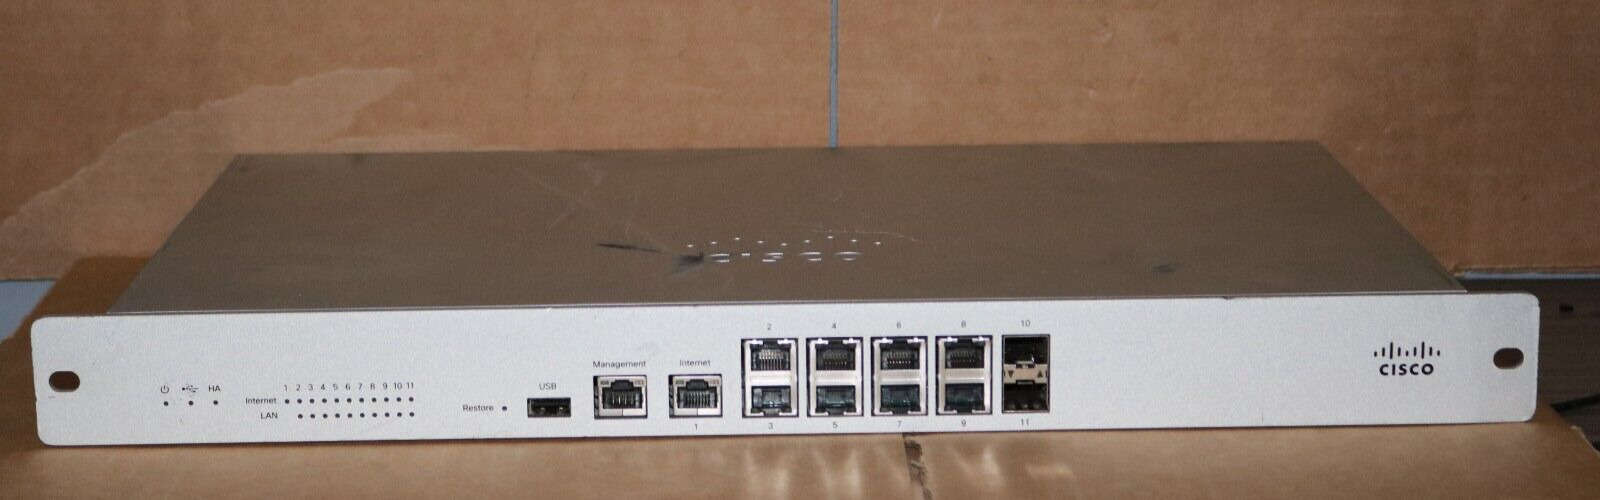 Cisco Meraki MX100-HW Firewall Cloud Managed Security Appliance, Pre-Owned.